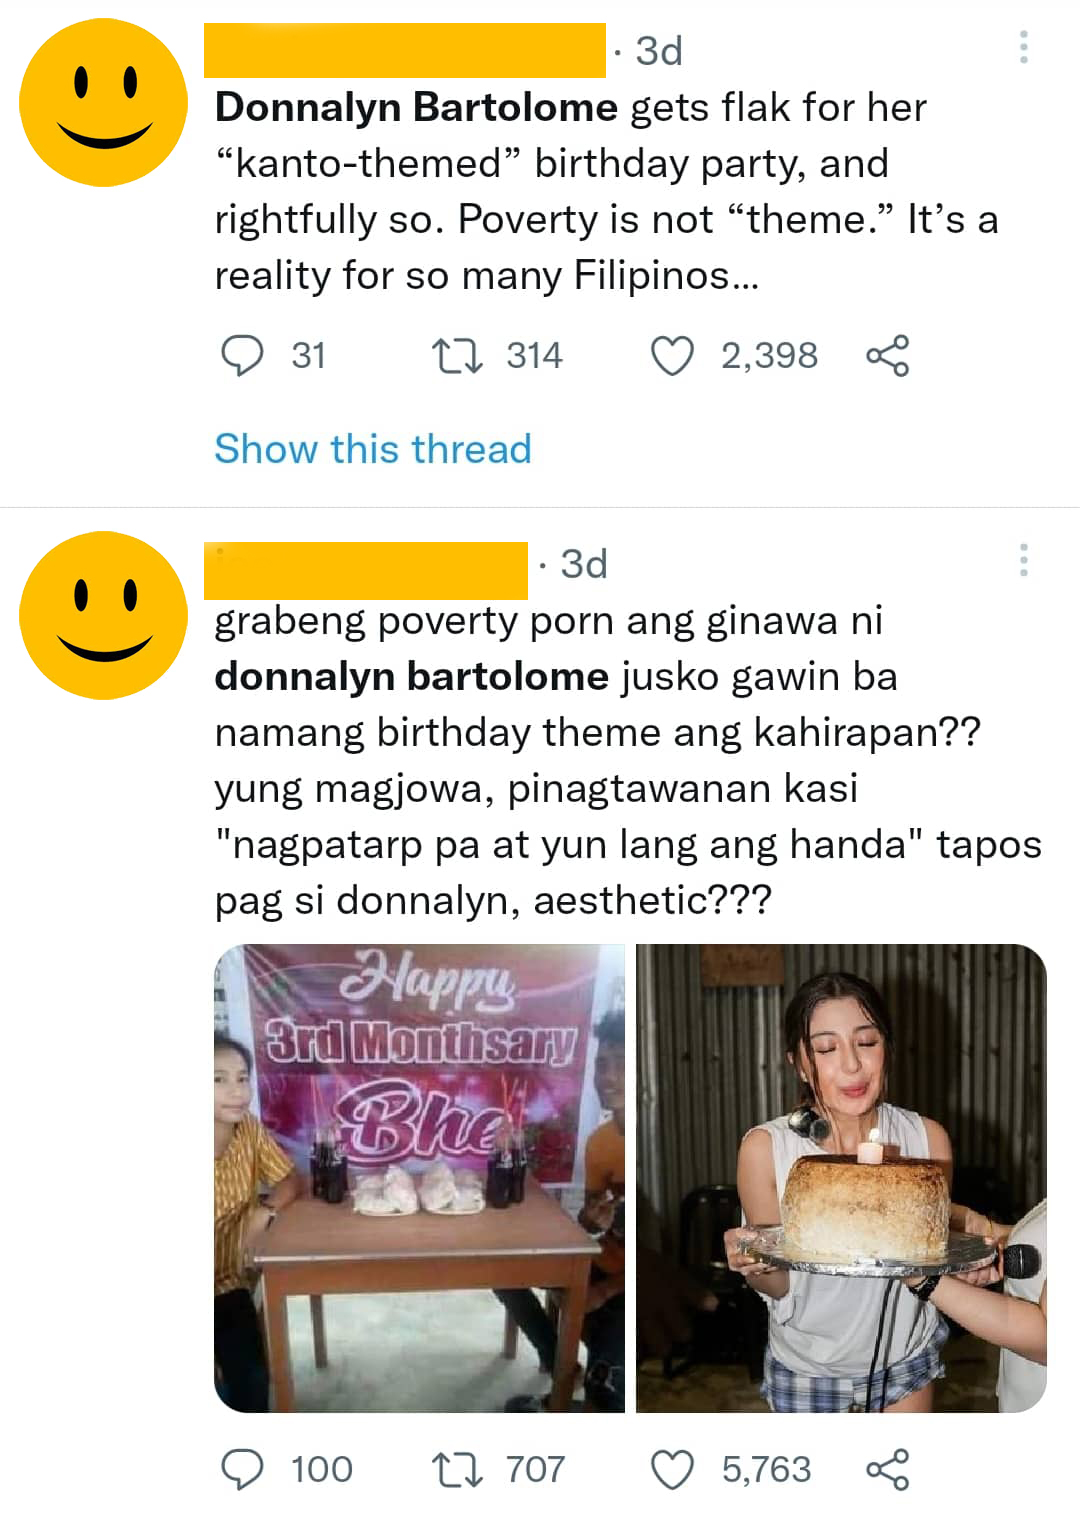 Netizens criticize Donnalyn Bartolome's kanto-themed birthday party